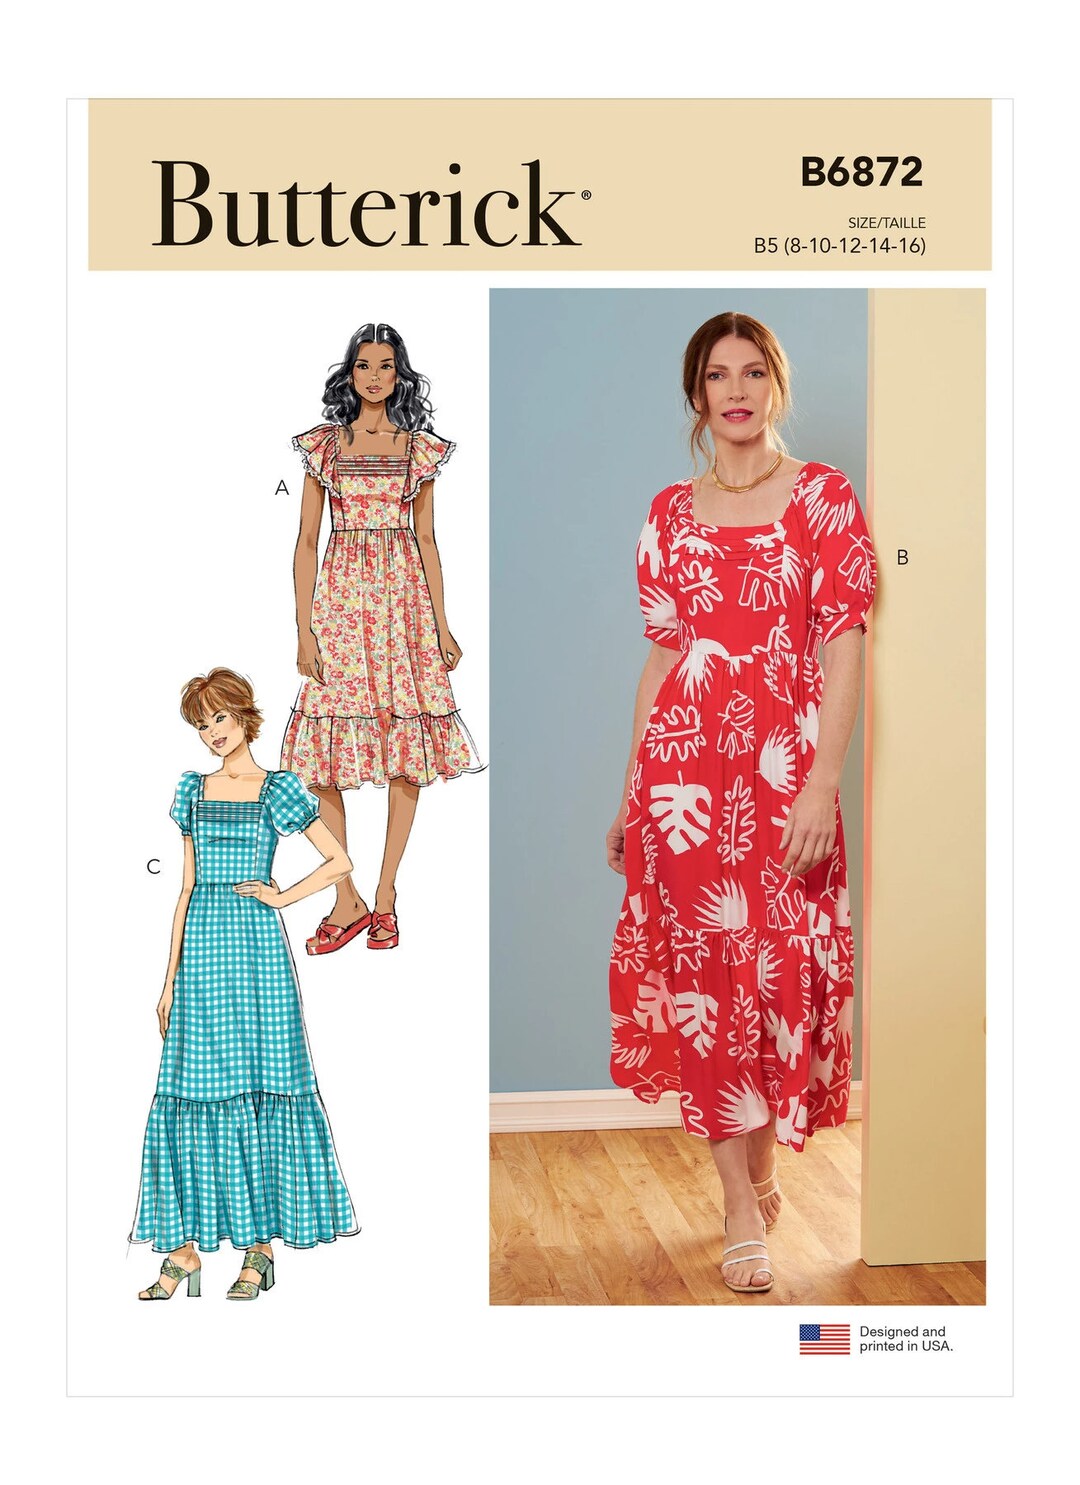 Easy Sewing Pattern for Women's Dress, Puff Sleeve Dress, Summer Dress ...